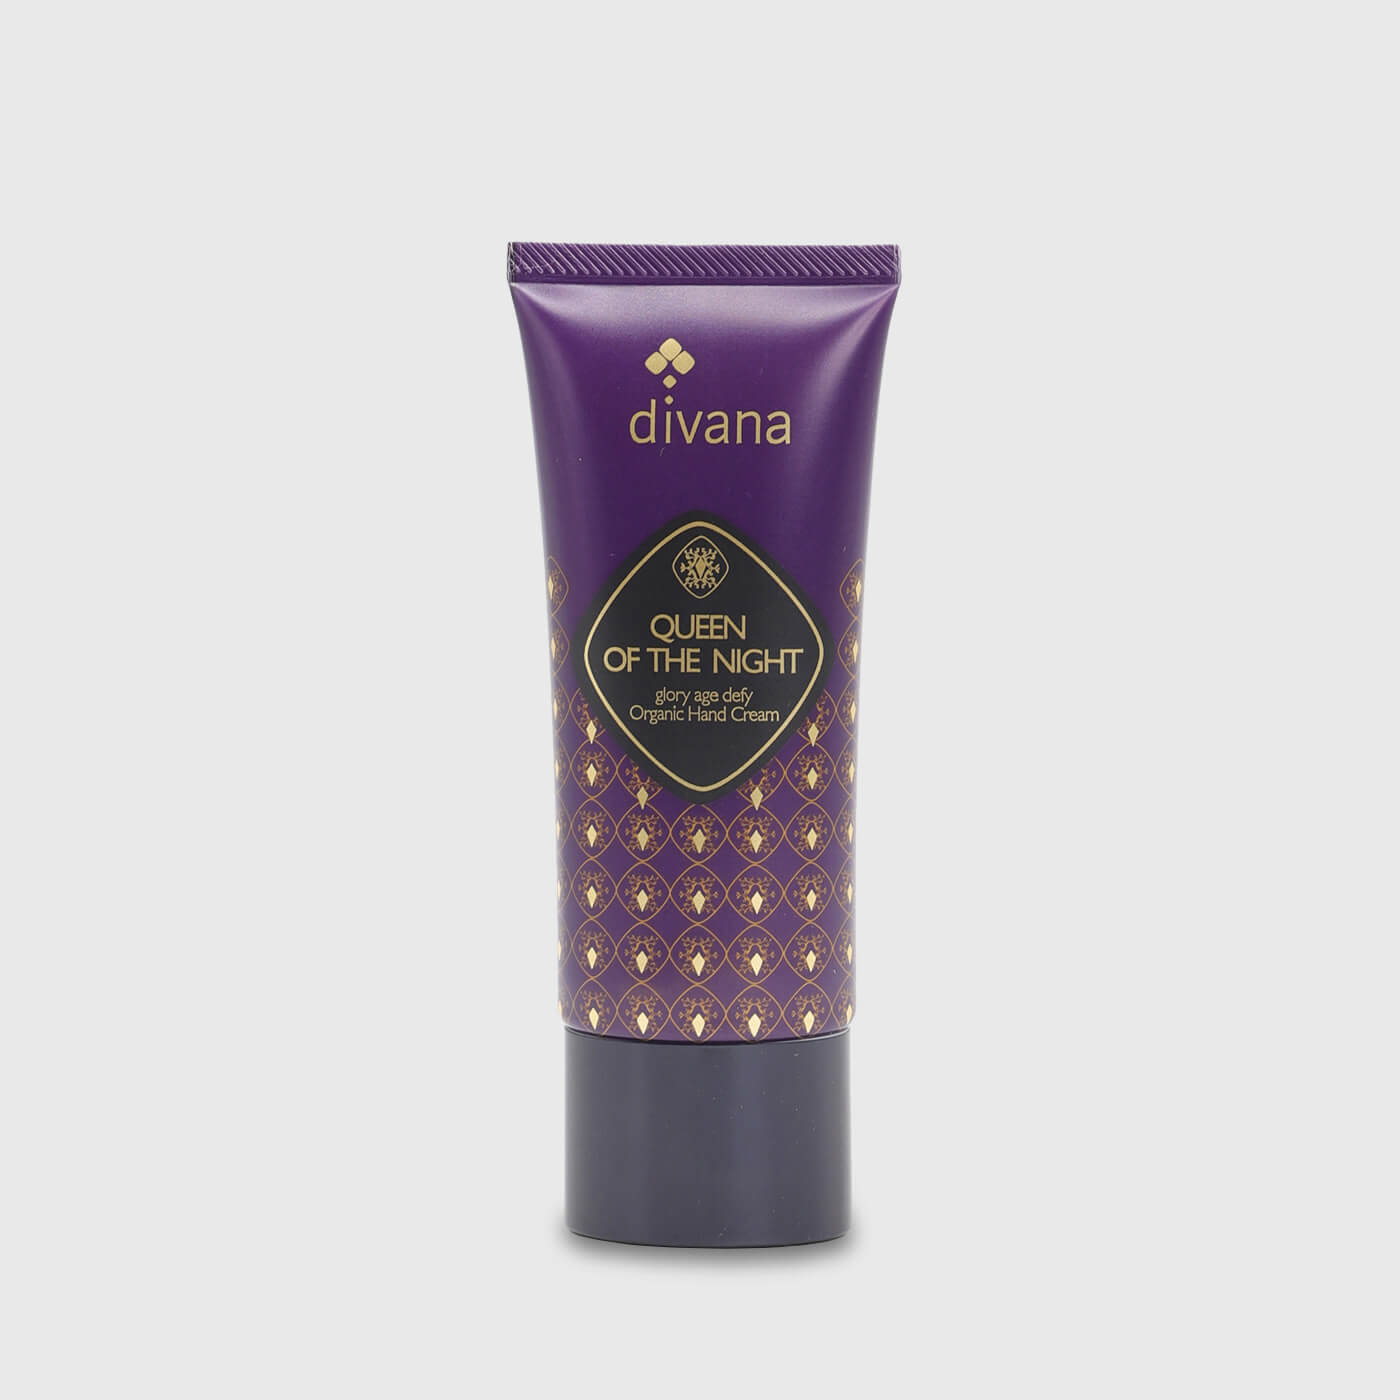 Divana Queen of the Night Glory Age Defy Organic Hand Cream (80 g)_免税价格_亿点免税